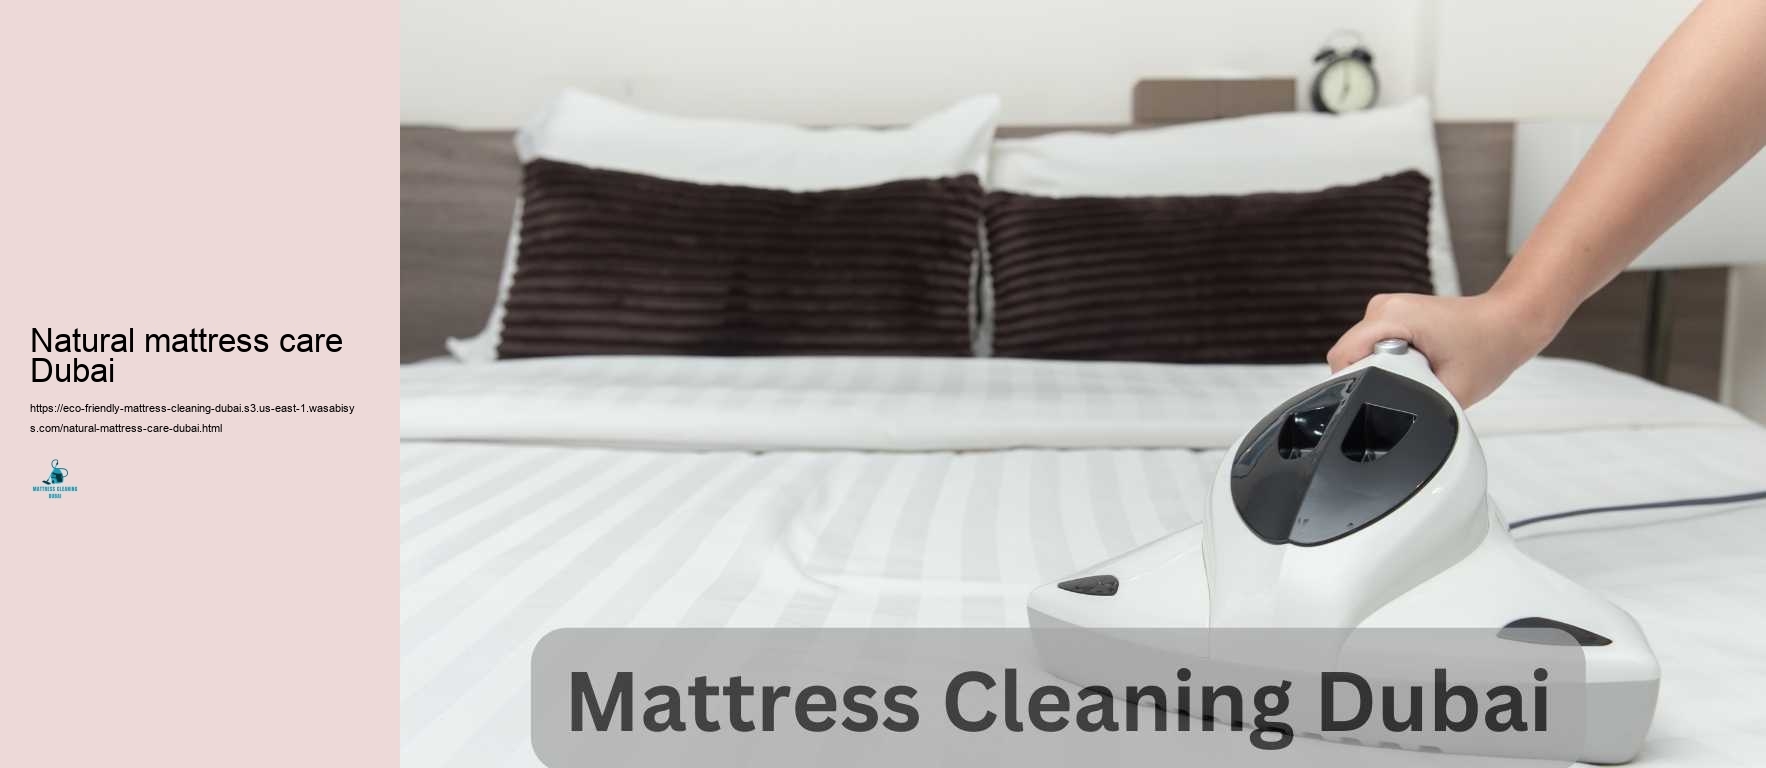 Natural mattress care Dubai